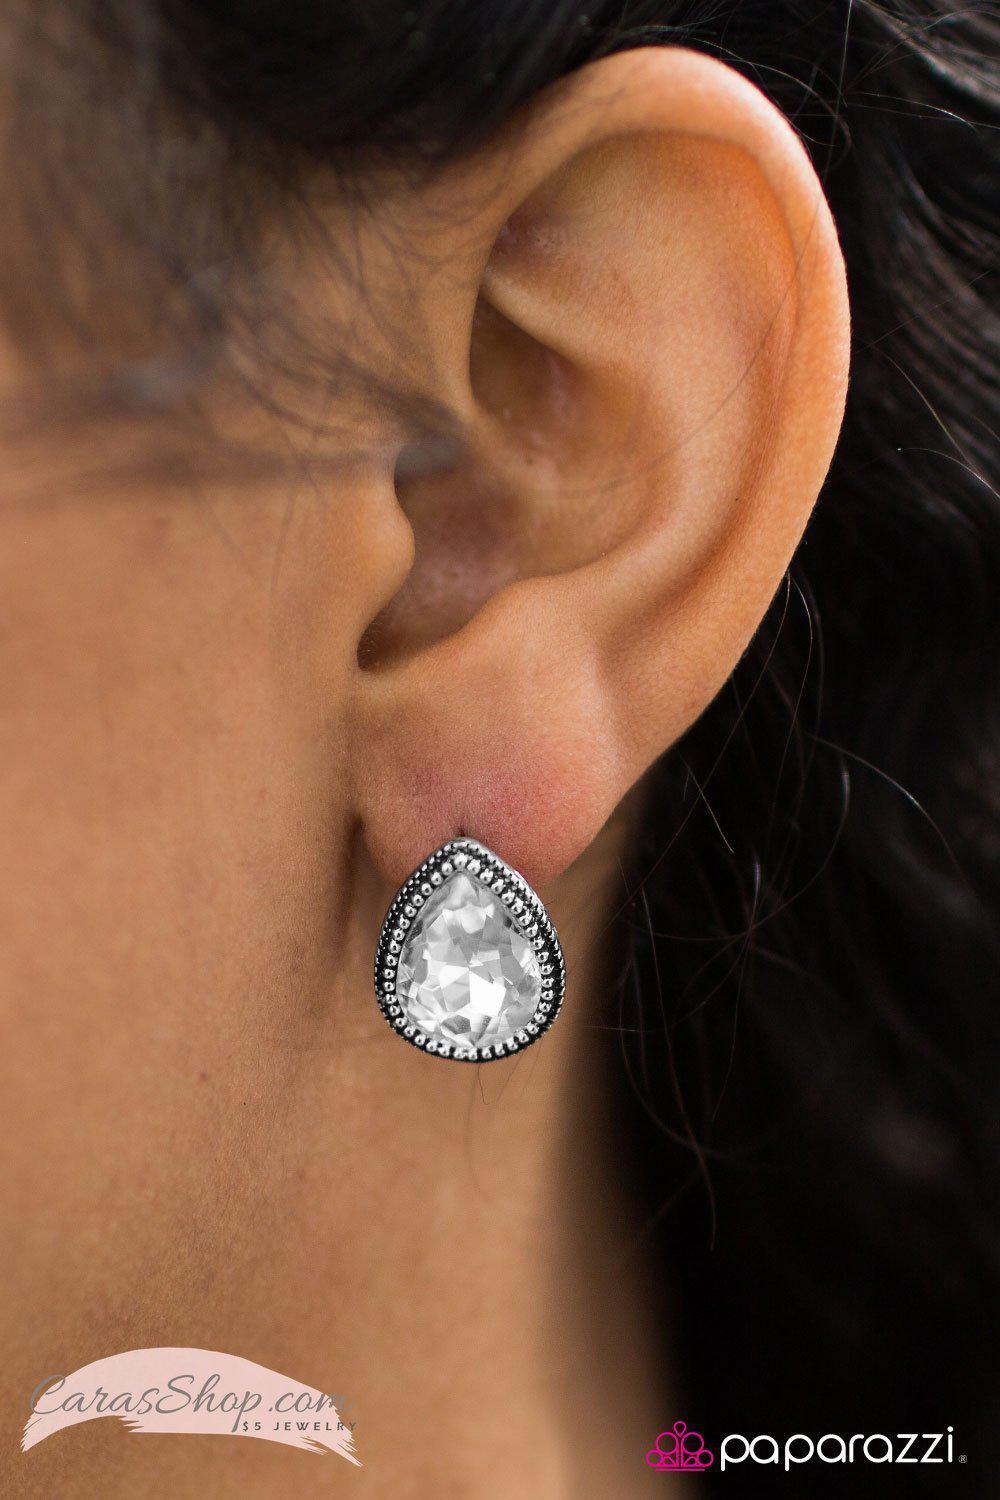 Big City Romance - White Teardrop Gem Post Earrings - Paparazzi Accessories-CarasShop.com - $5 Jewelry by Cara Jewels